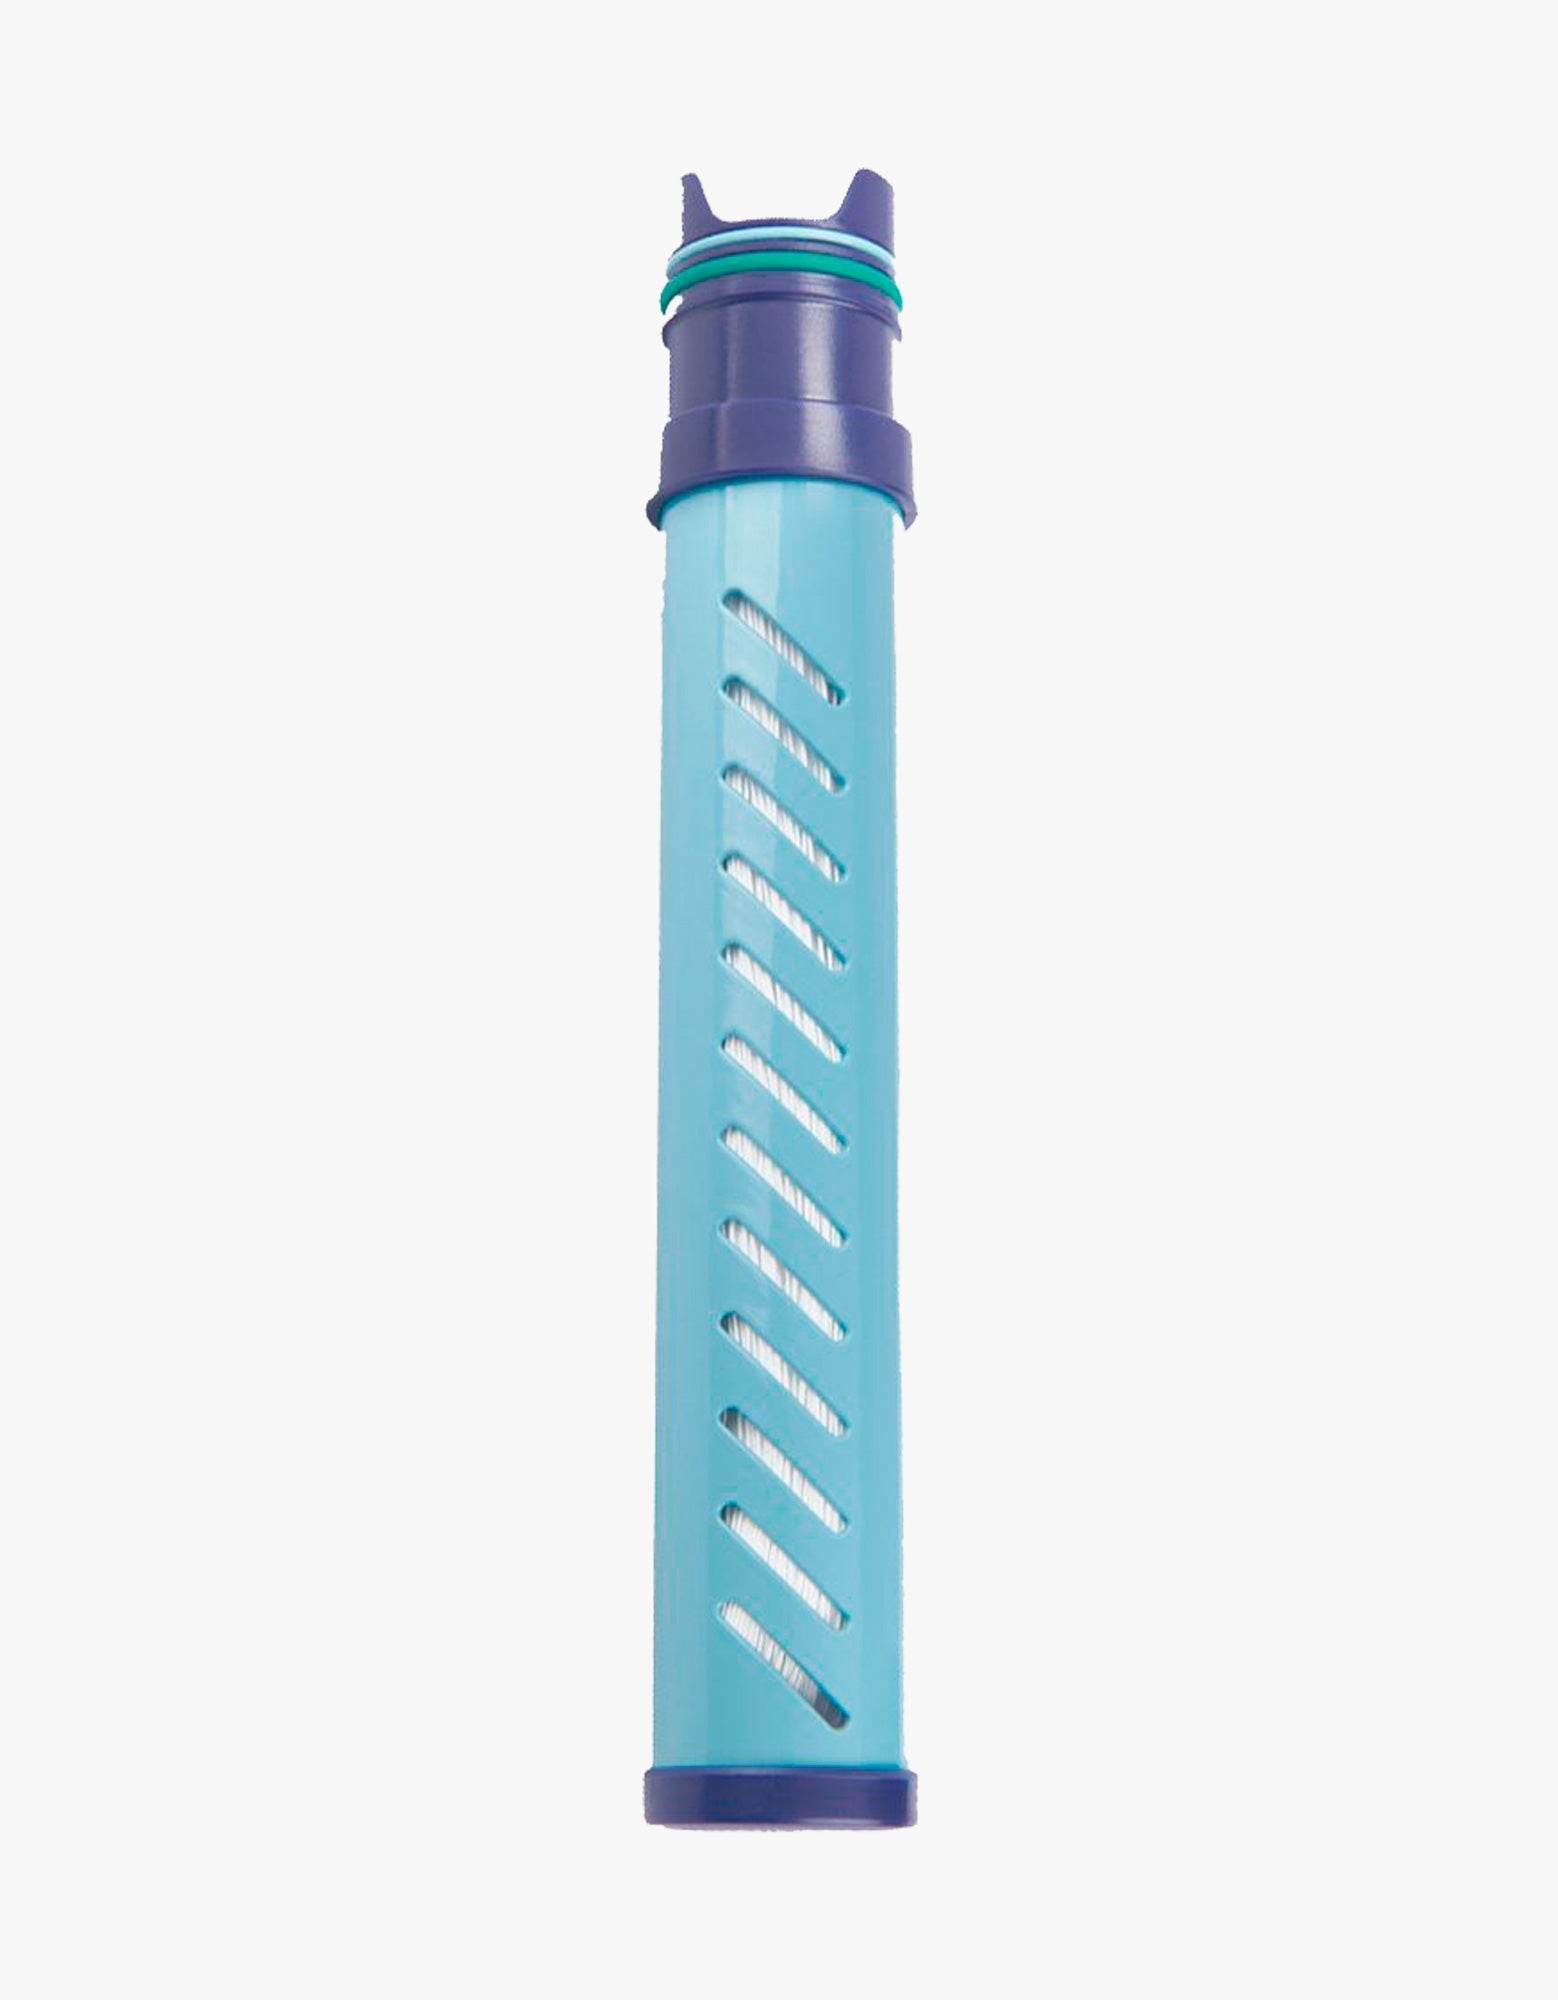 LifeStraw Go 2-Stage Filtration Water Bottle Light Blue